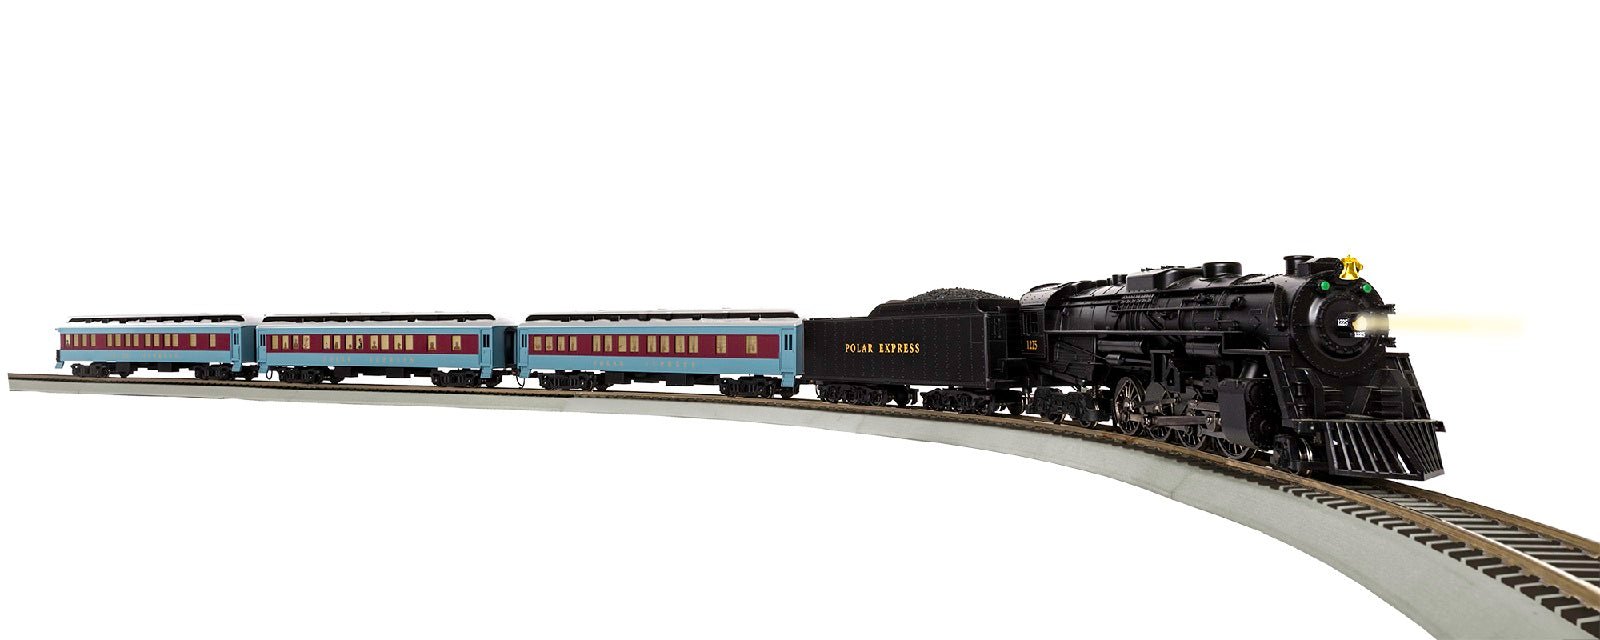 Lionel The Polar Express Train Set, HO Scale